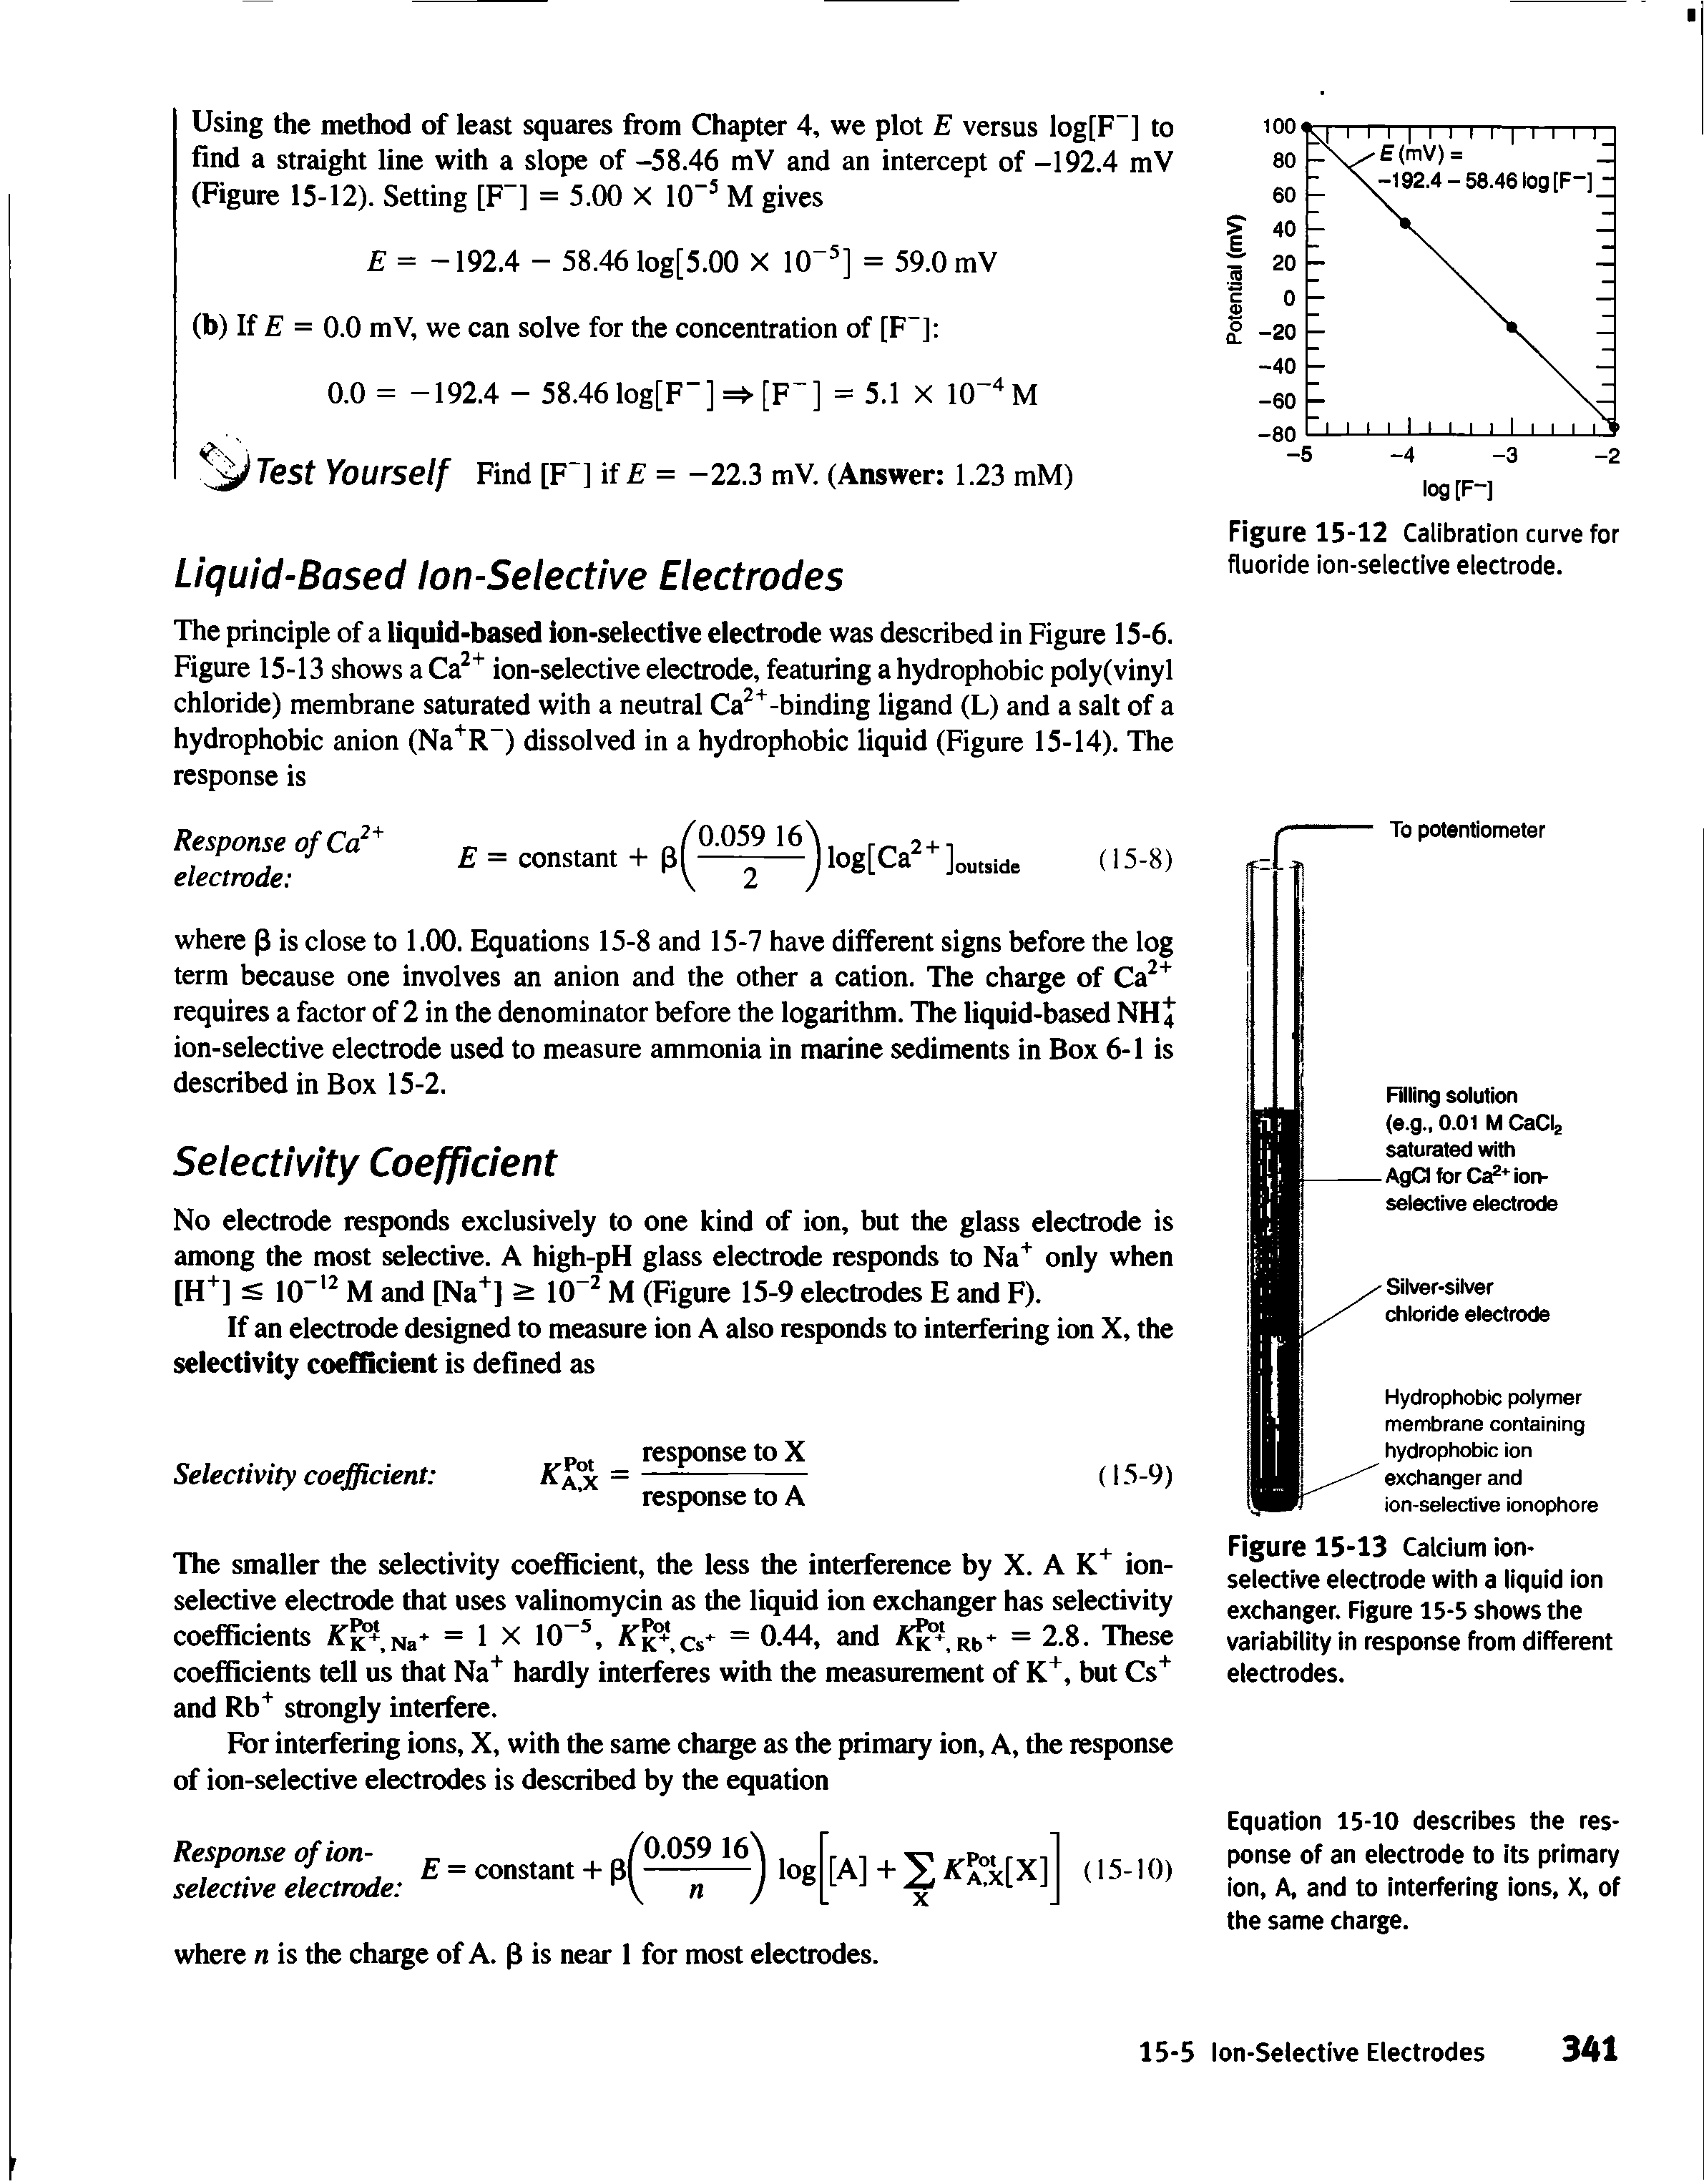 Figure 15-12 Calibration curve for fluoride ion-selective electrode.